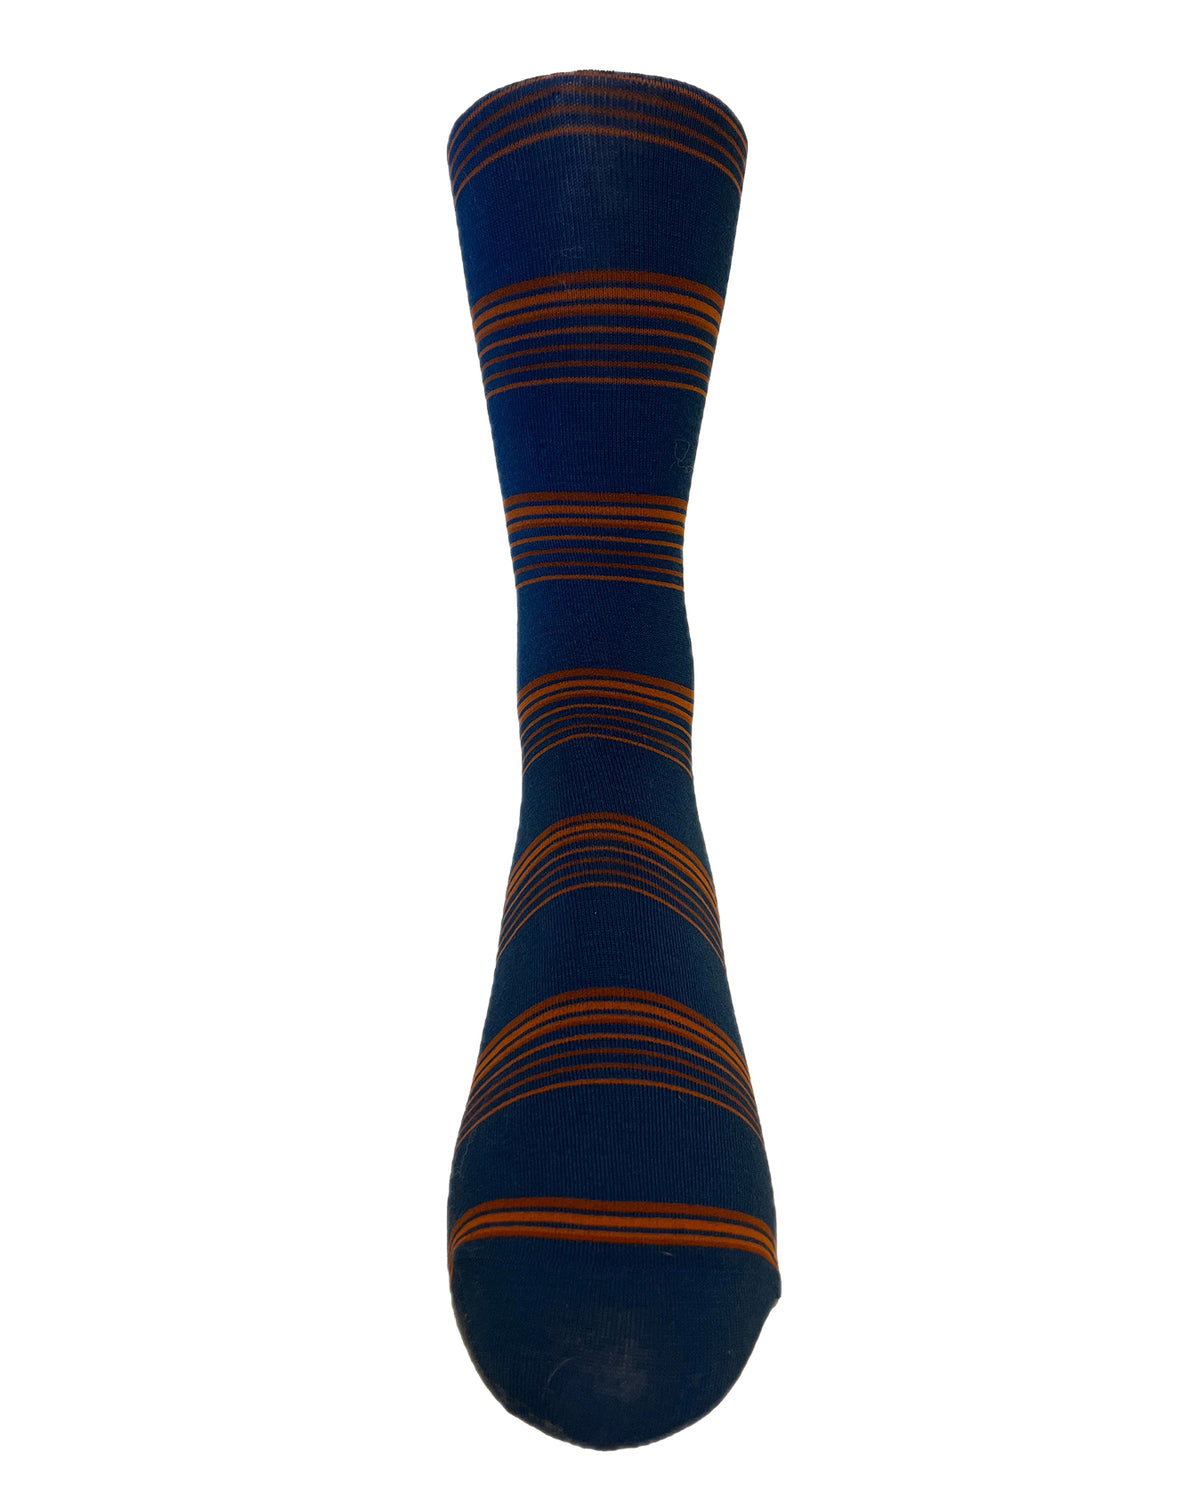 Striped Calf Length Socks - Blue/Orange